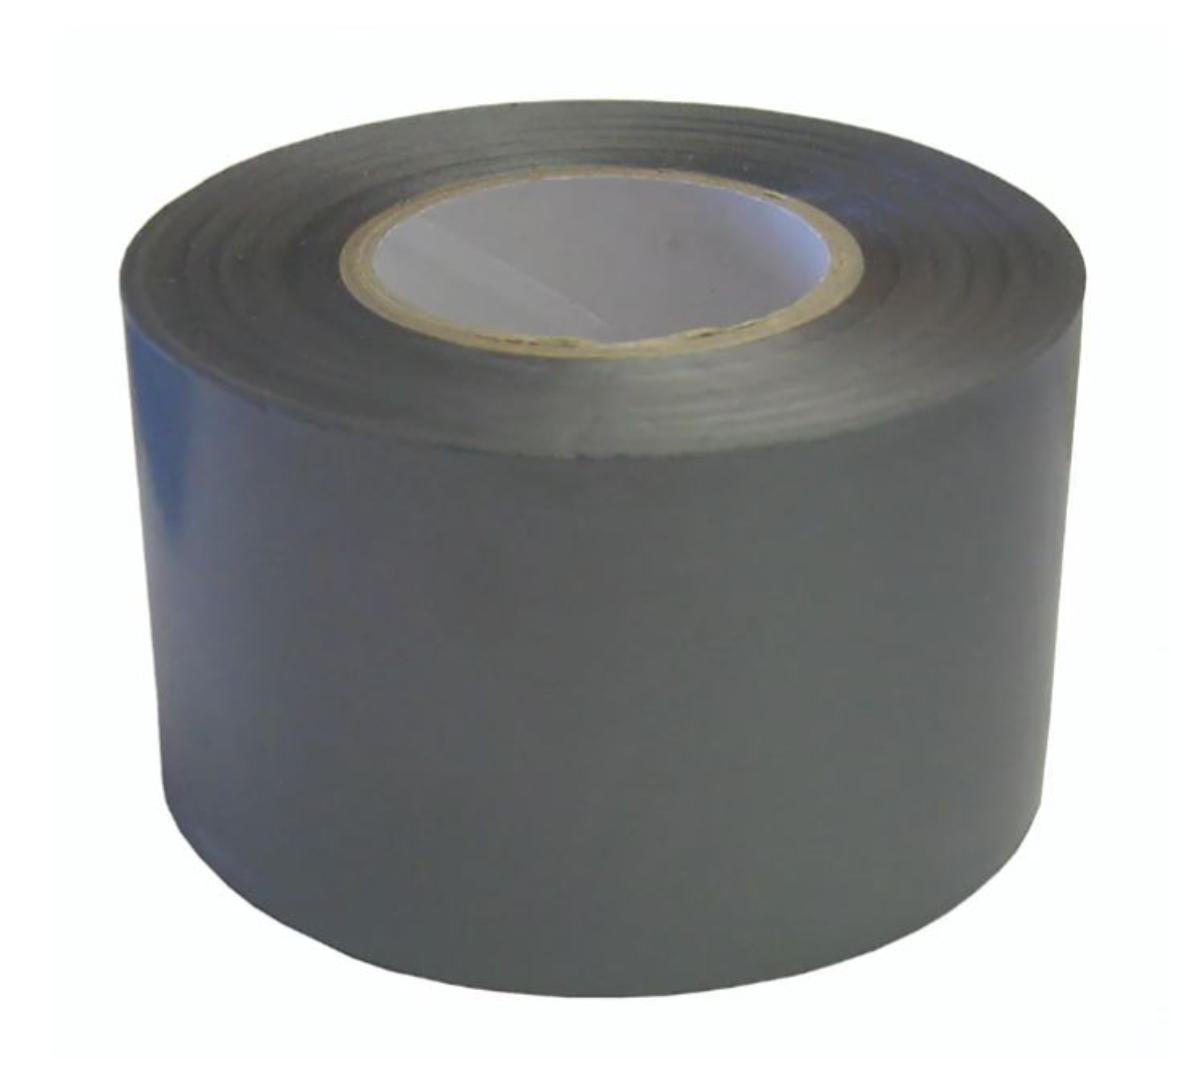 PVC Grey Duct Tape 48mm x 30m